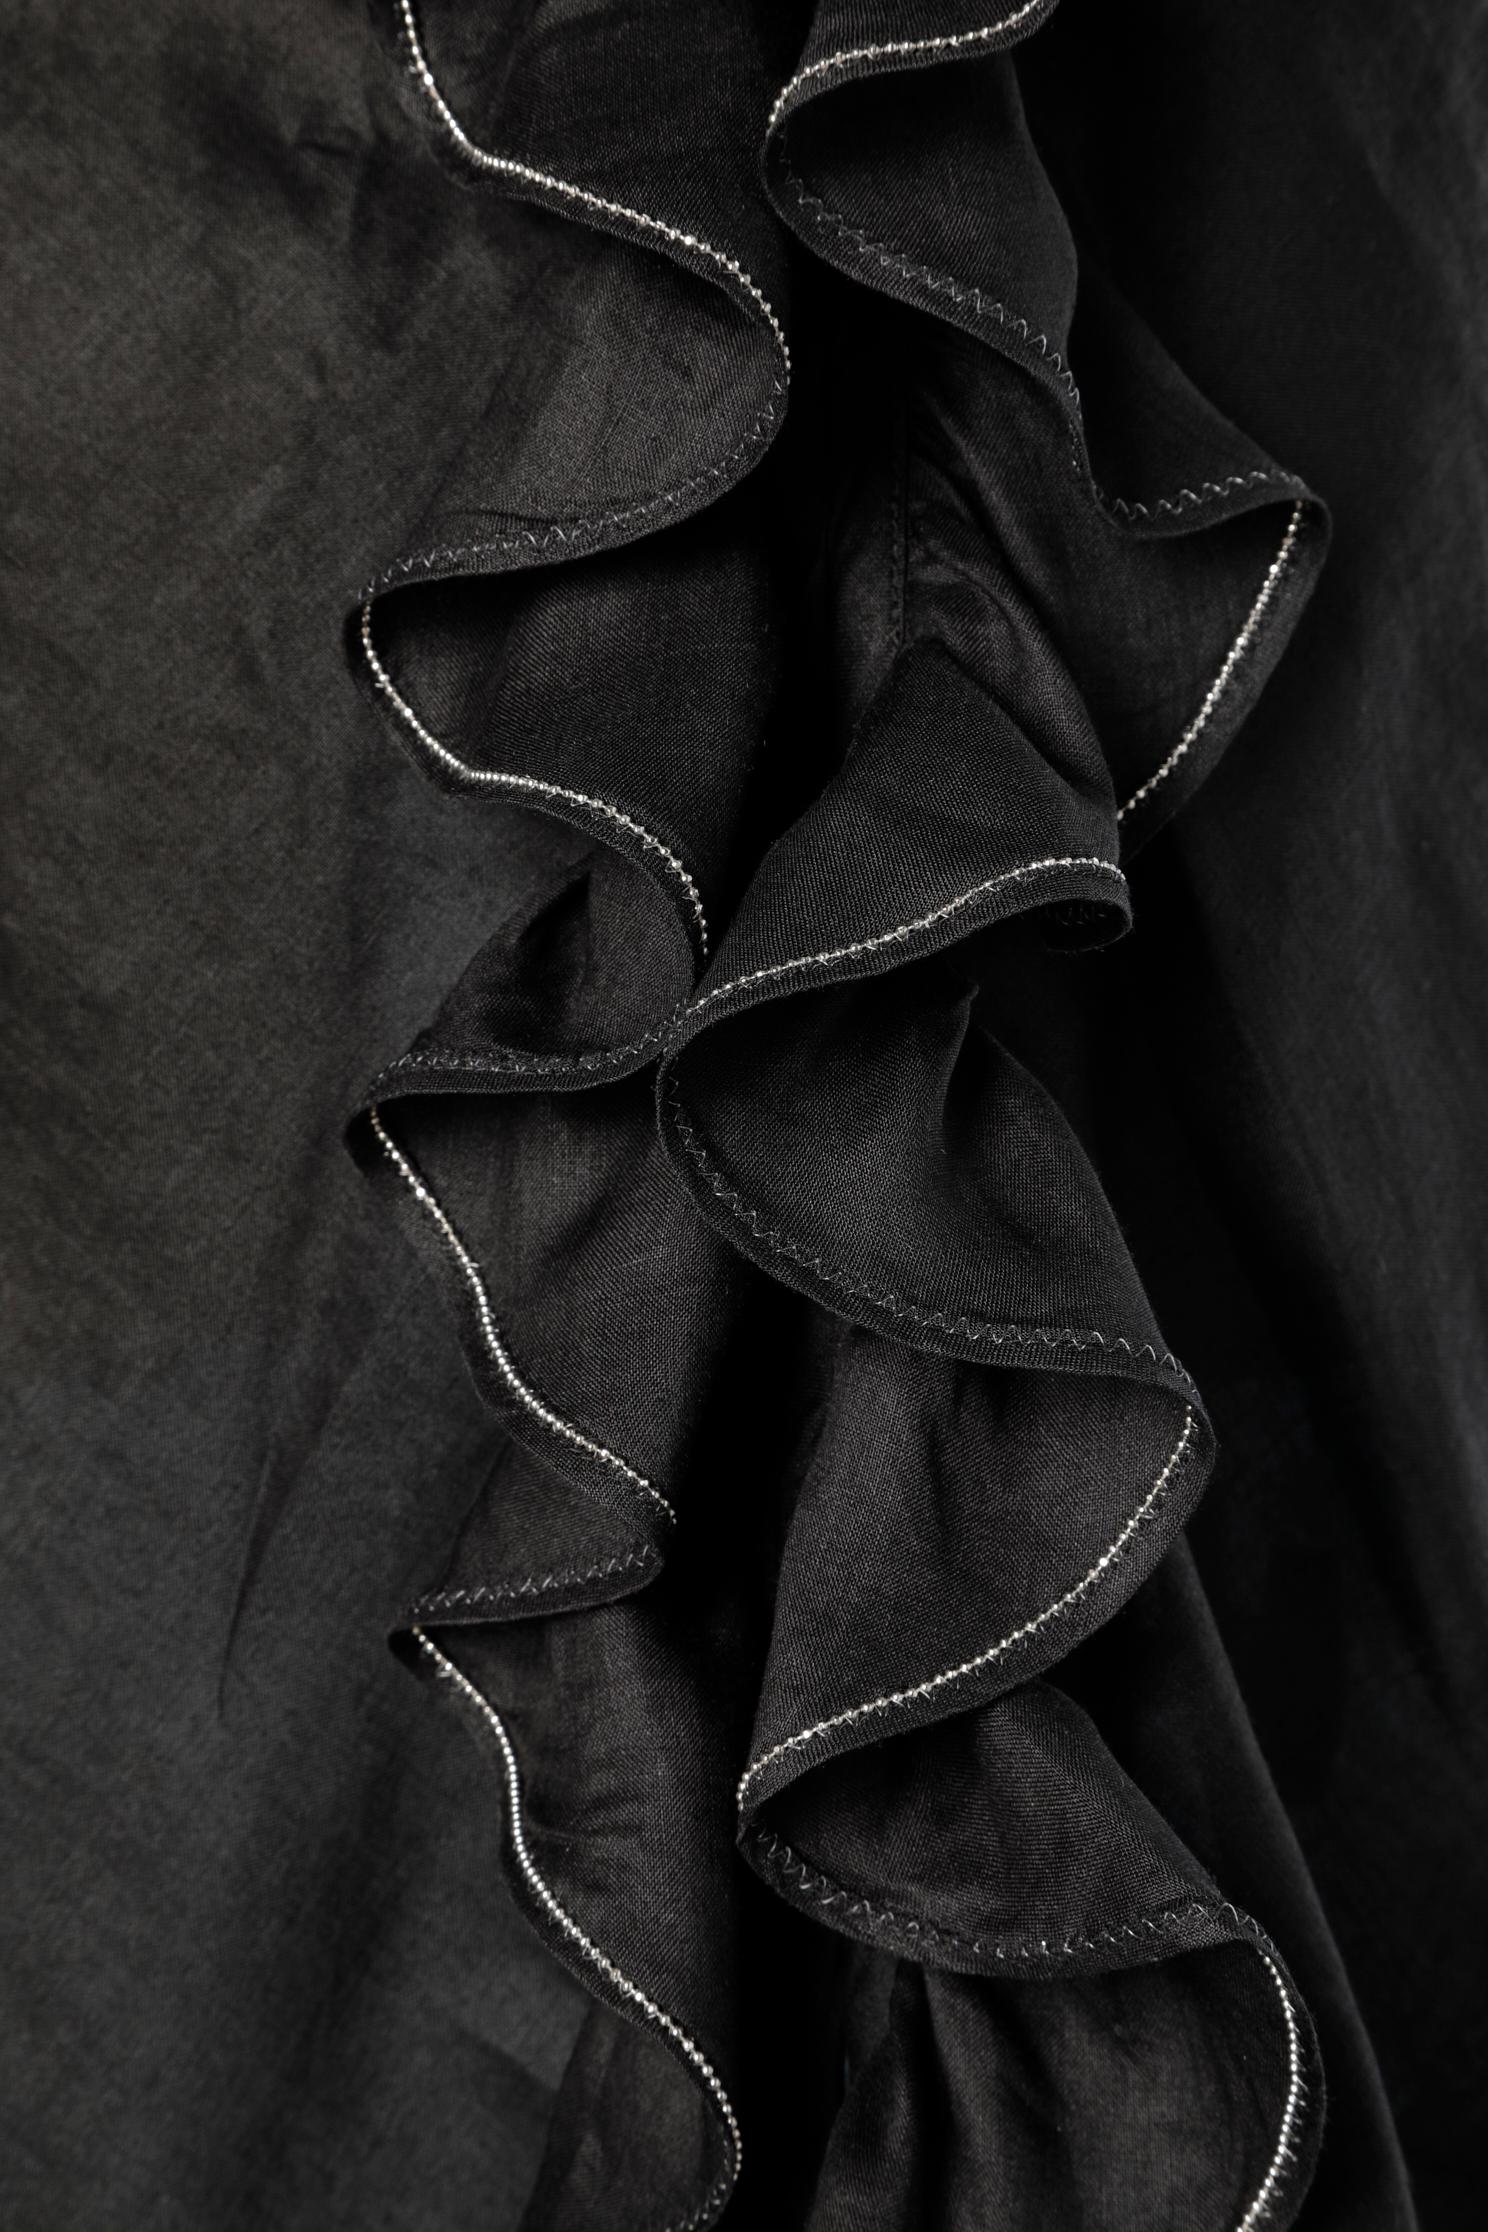 Black linen skirt with ruffles.
Size 44(It) 40 (Fr) L ( Us) 